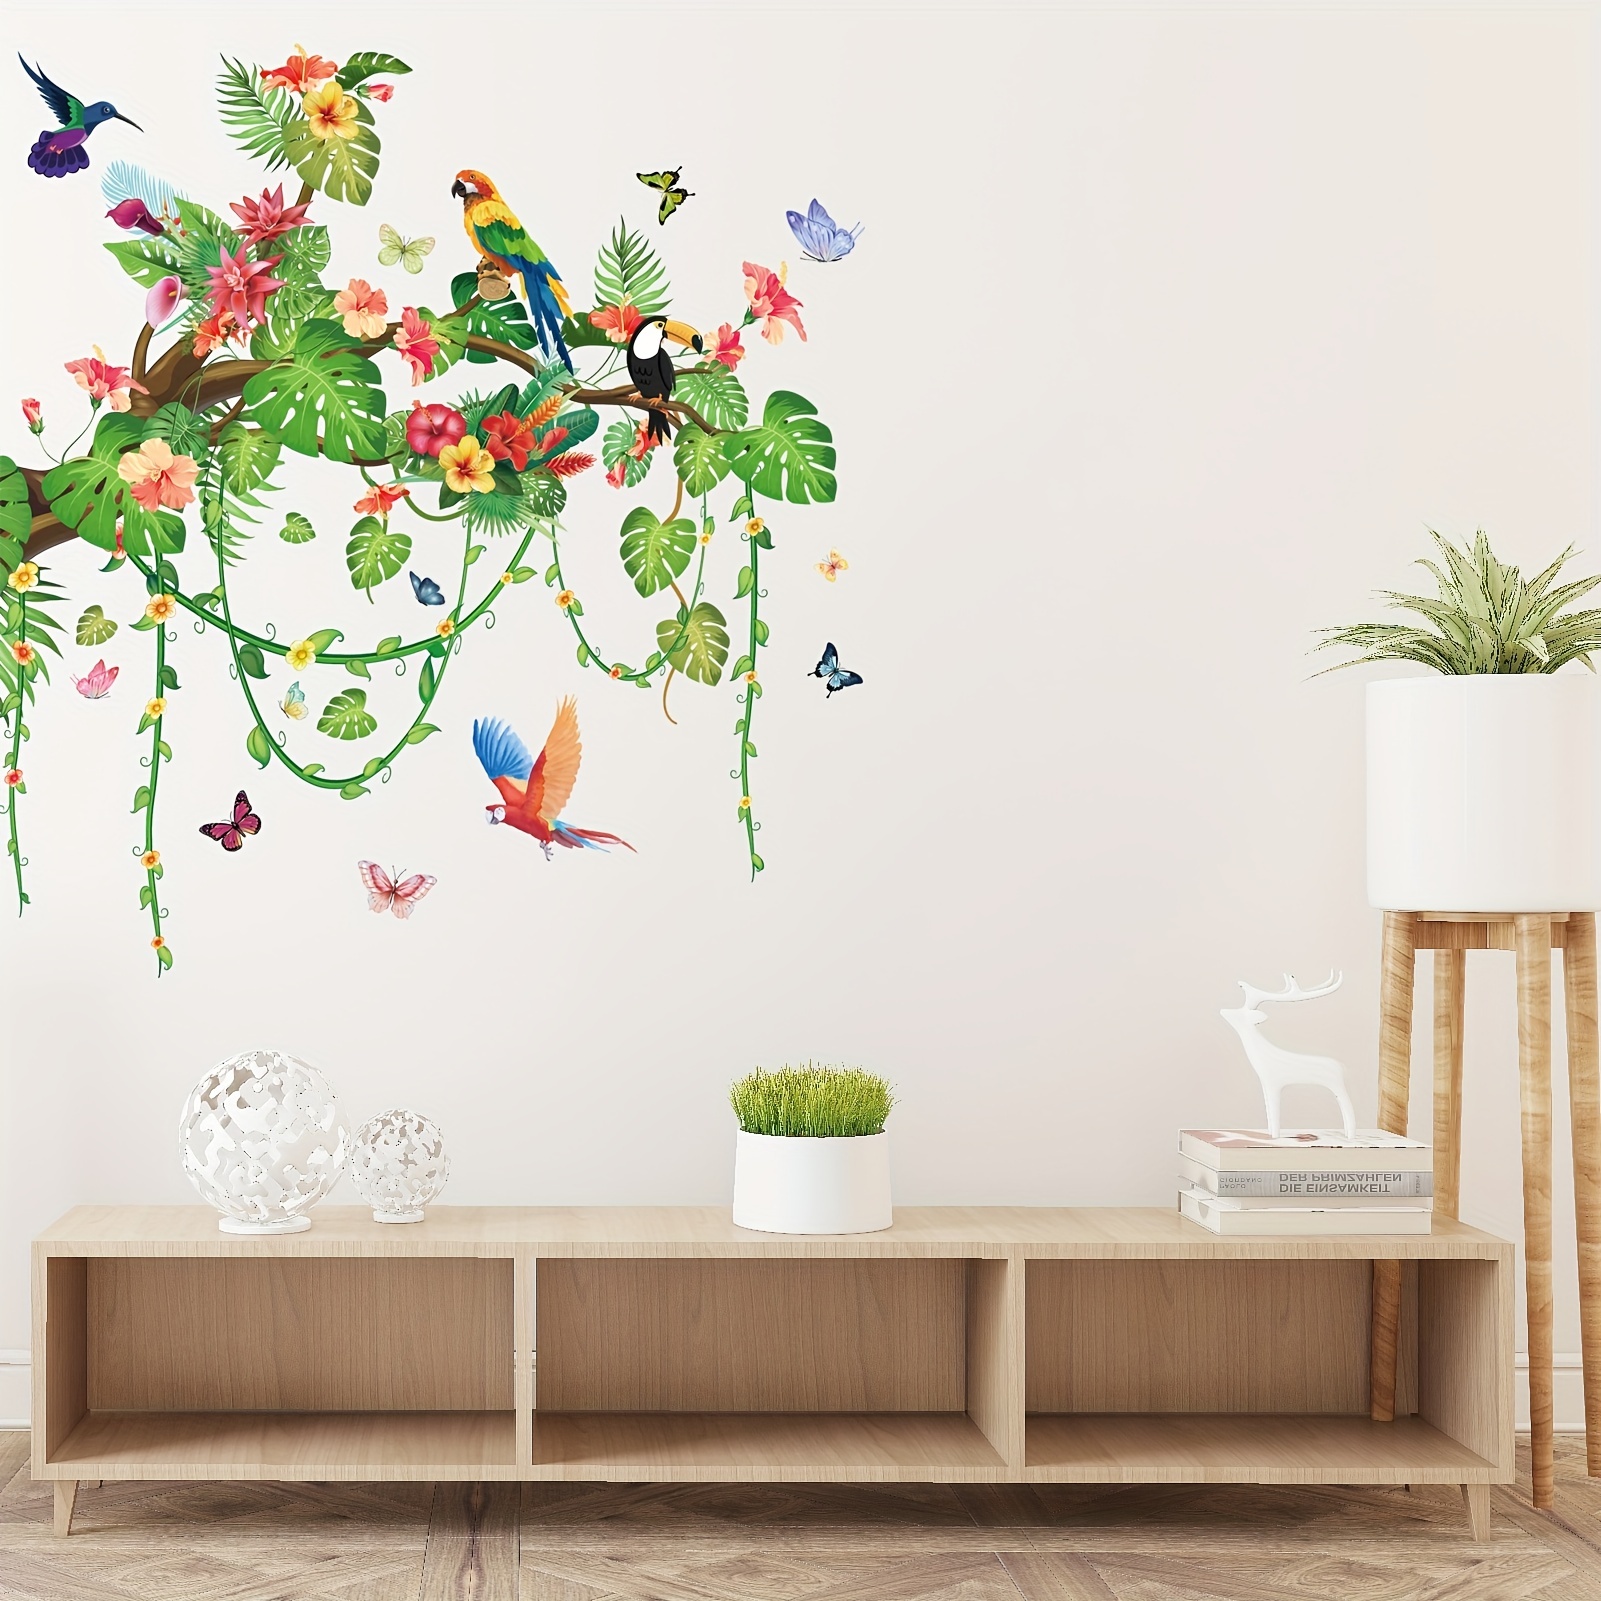 Sticker Mural Feuille Verte, Sticker Mural Nature Feuilles De Vigne  Tropicales, Sticker Mural Fleur, Sticker Mural Oiseaux Pour Salon Chambre  Couloir